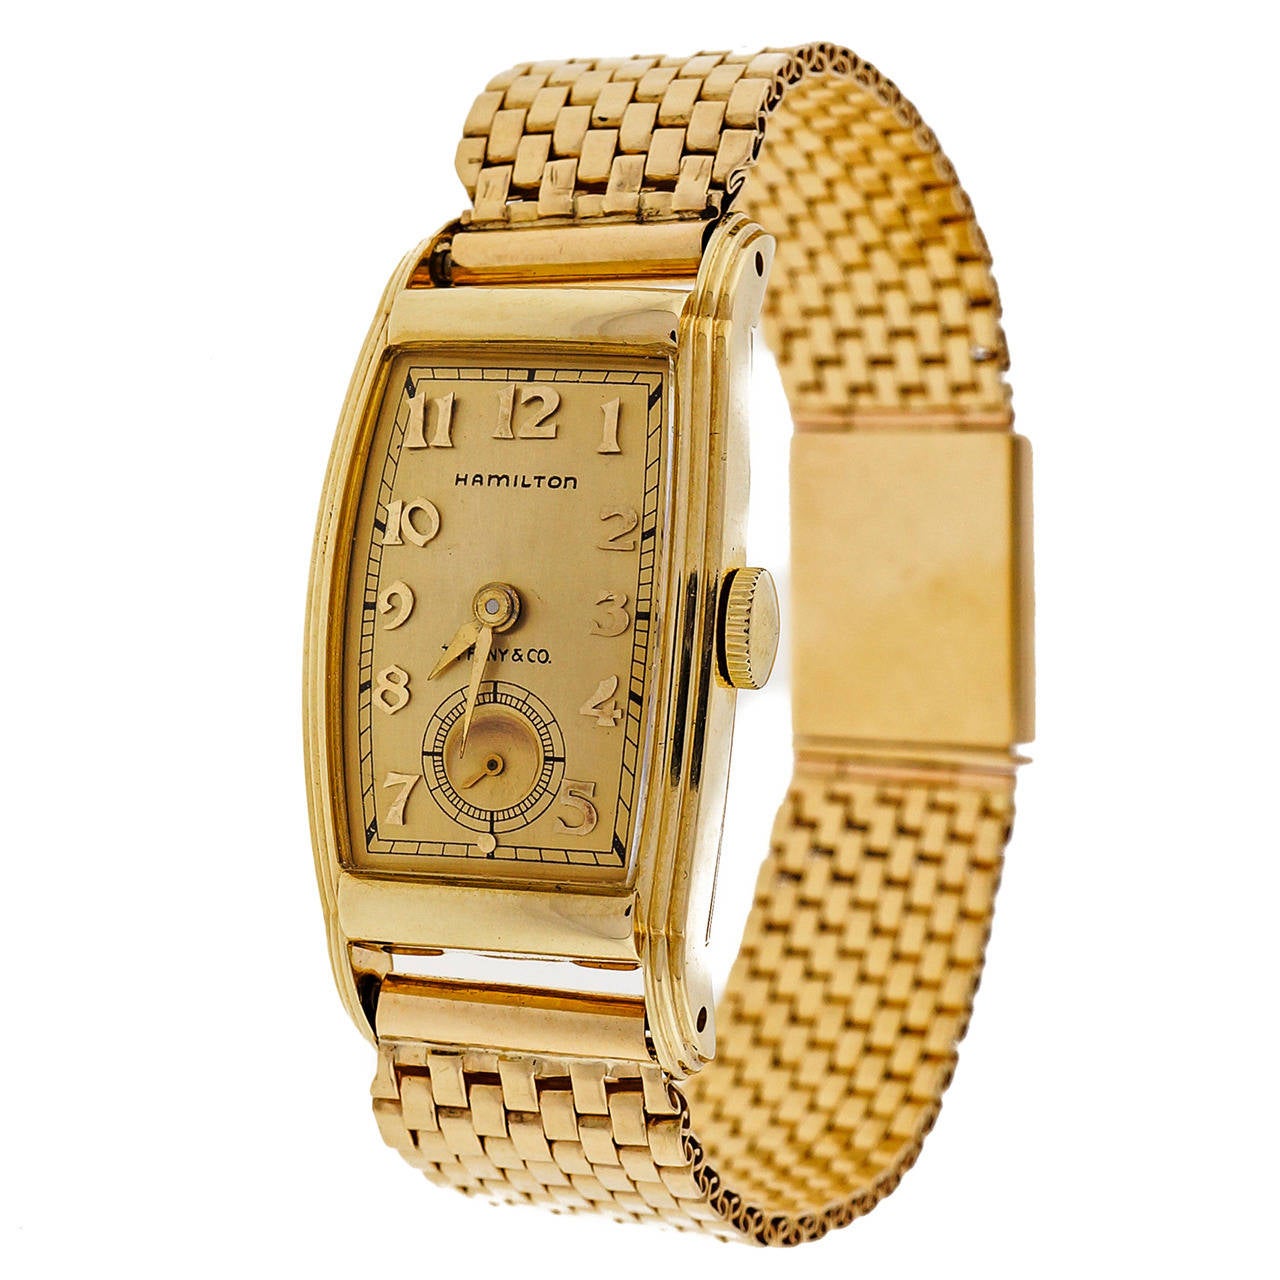 Hamilton Yellow Gold Tonneau Wristwatch Retailed by Tiffany & Co circa 1940s